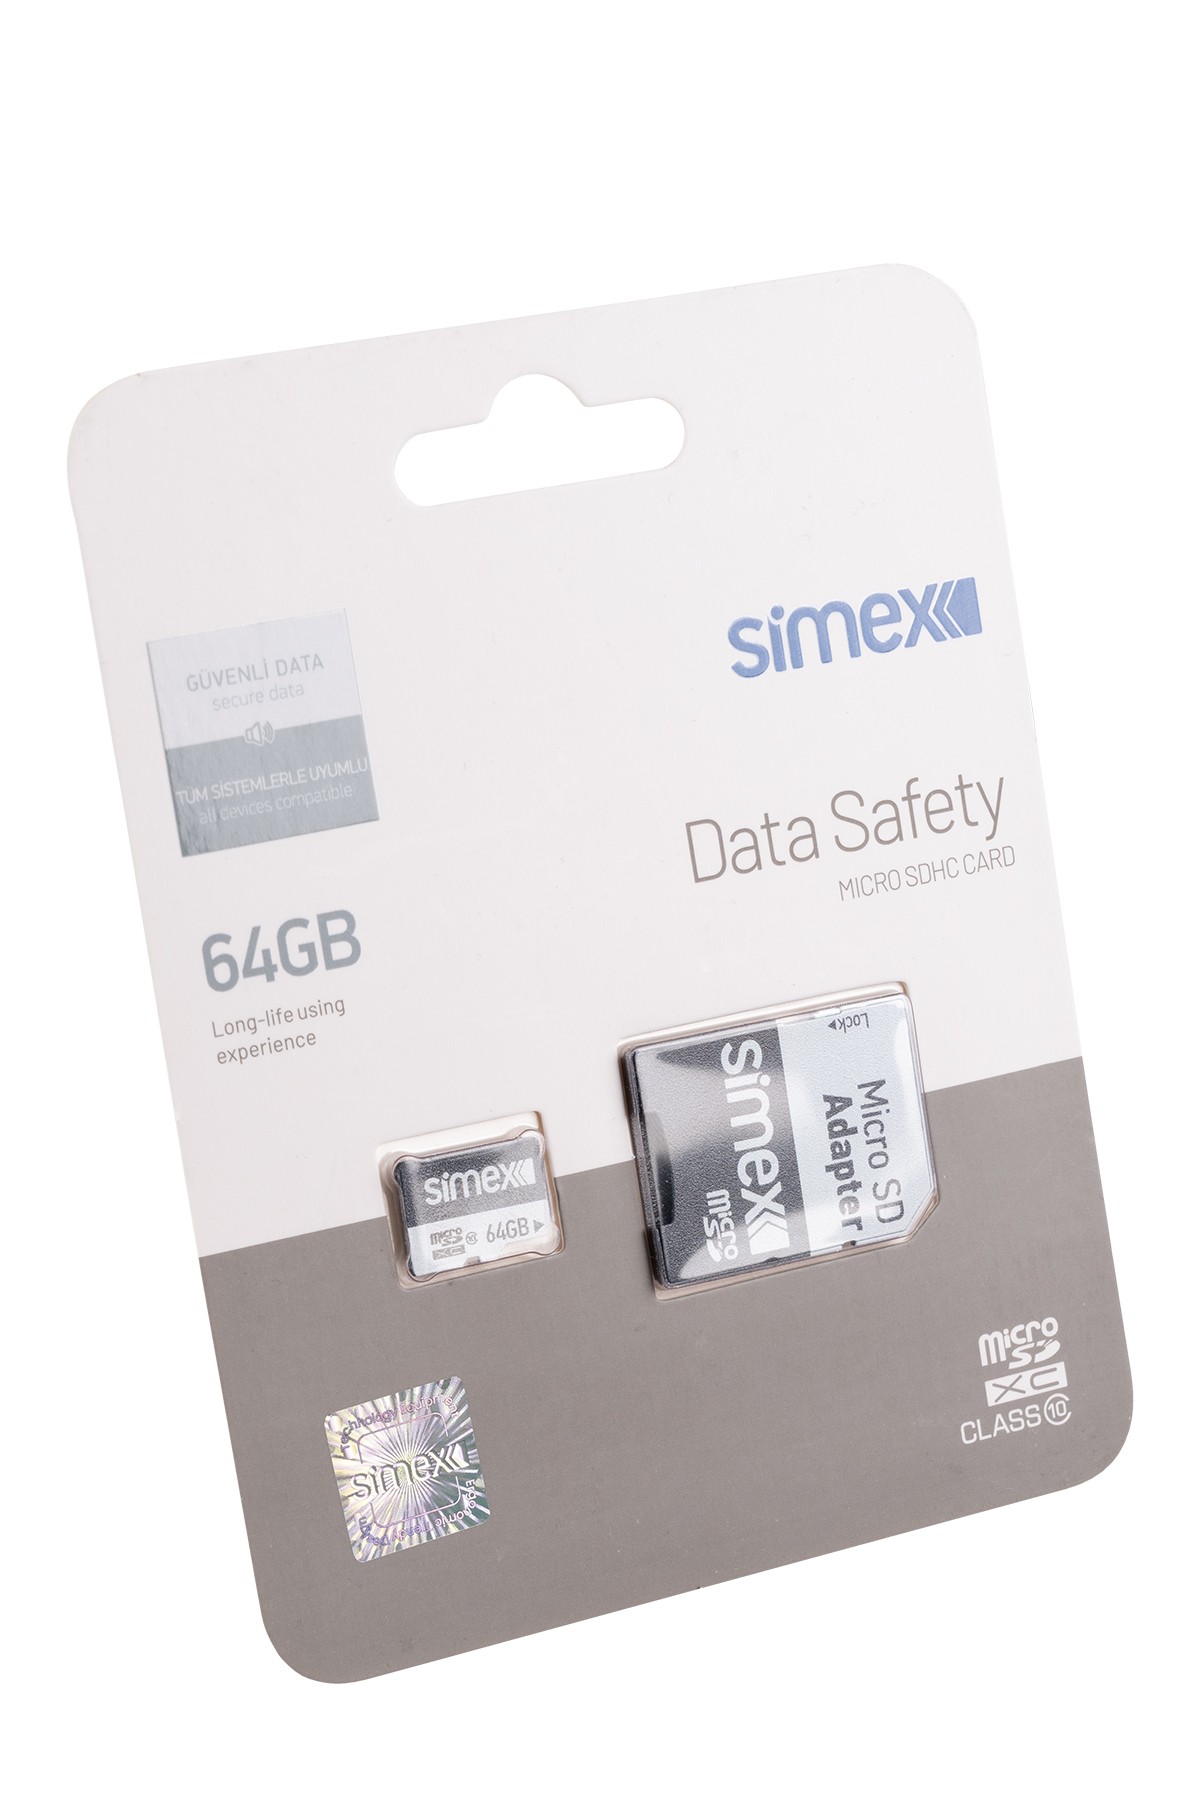 Simex SH-101 Data Safety Micro SD 64GB Hafıza Kartı